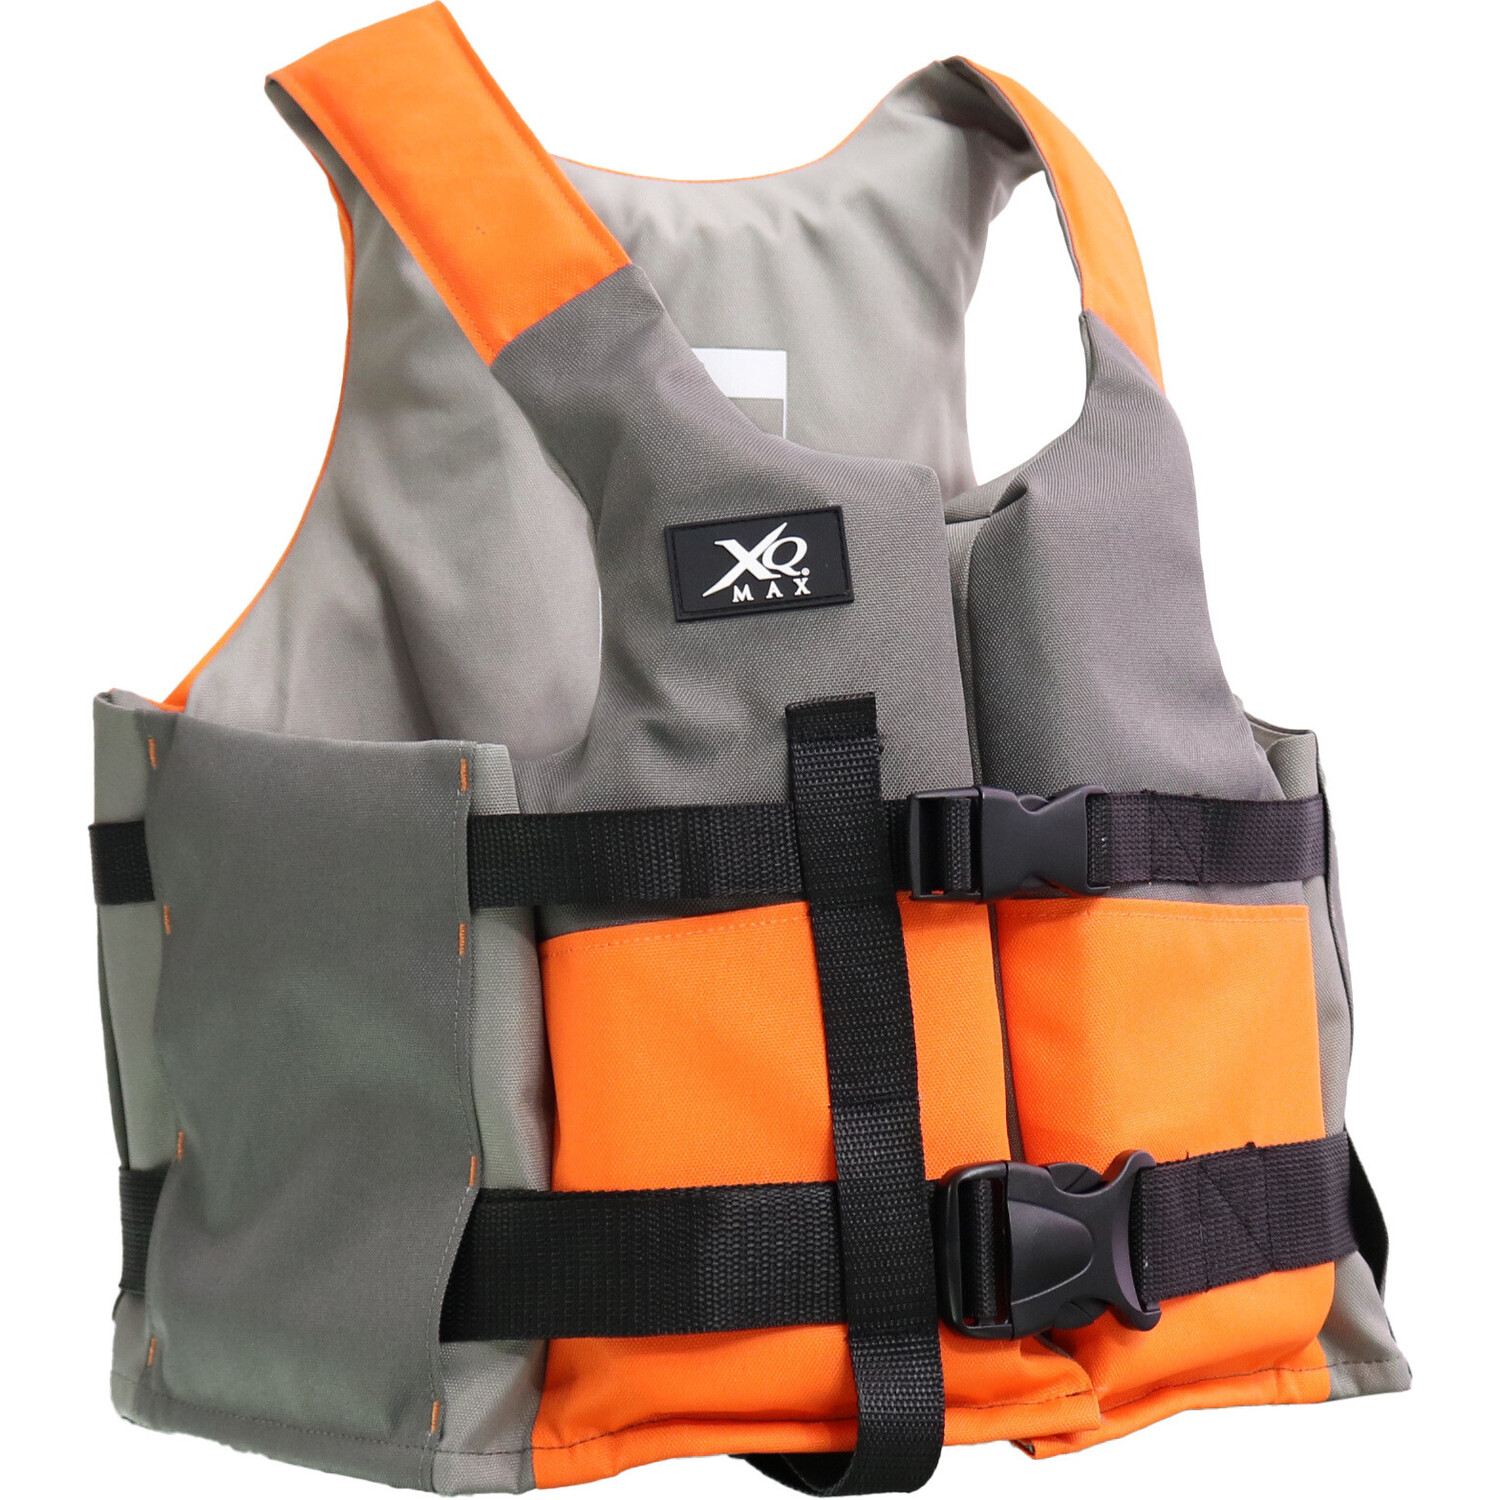 XQMAX Buoyancy Aid - Grey / Medium Image